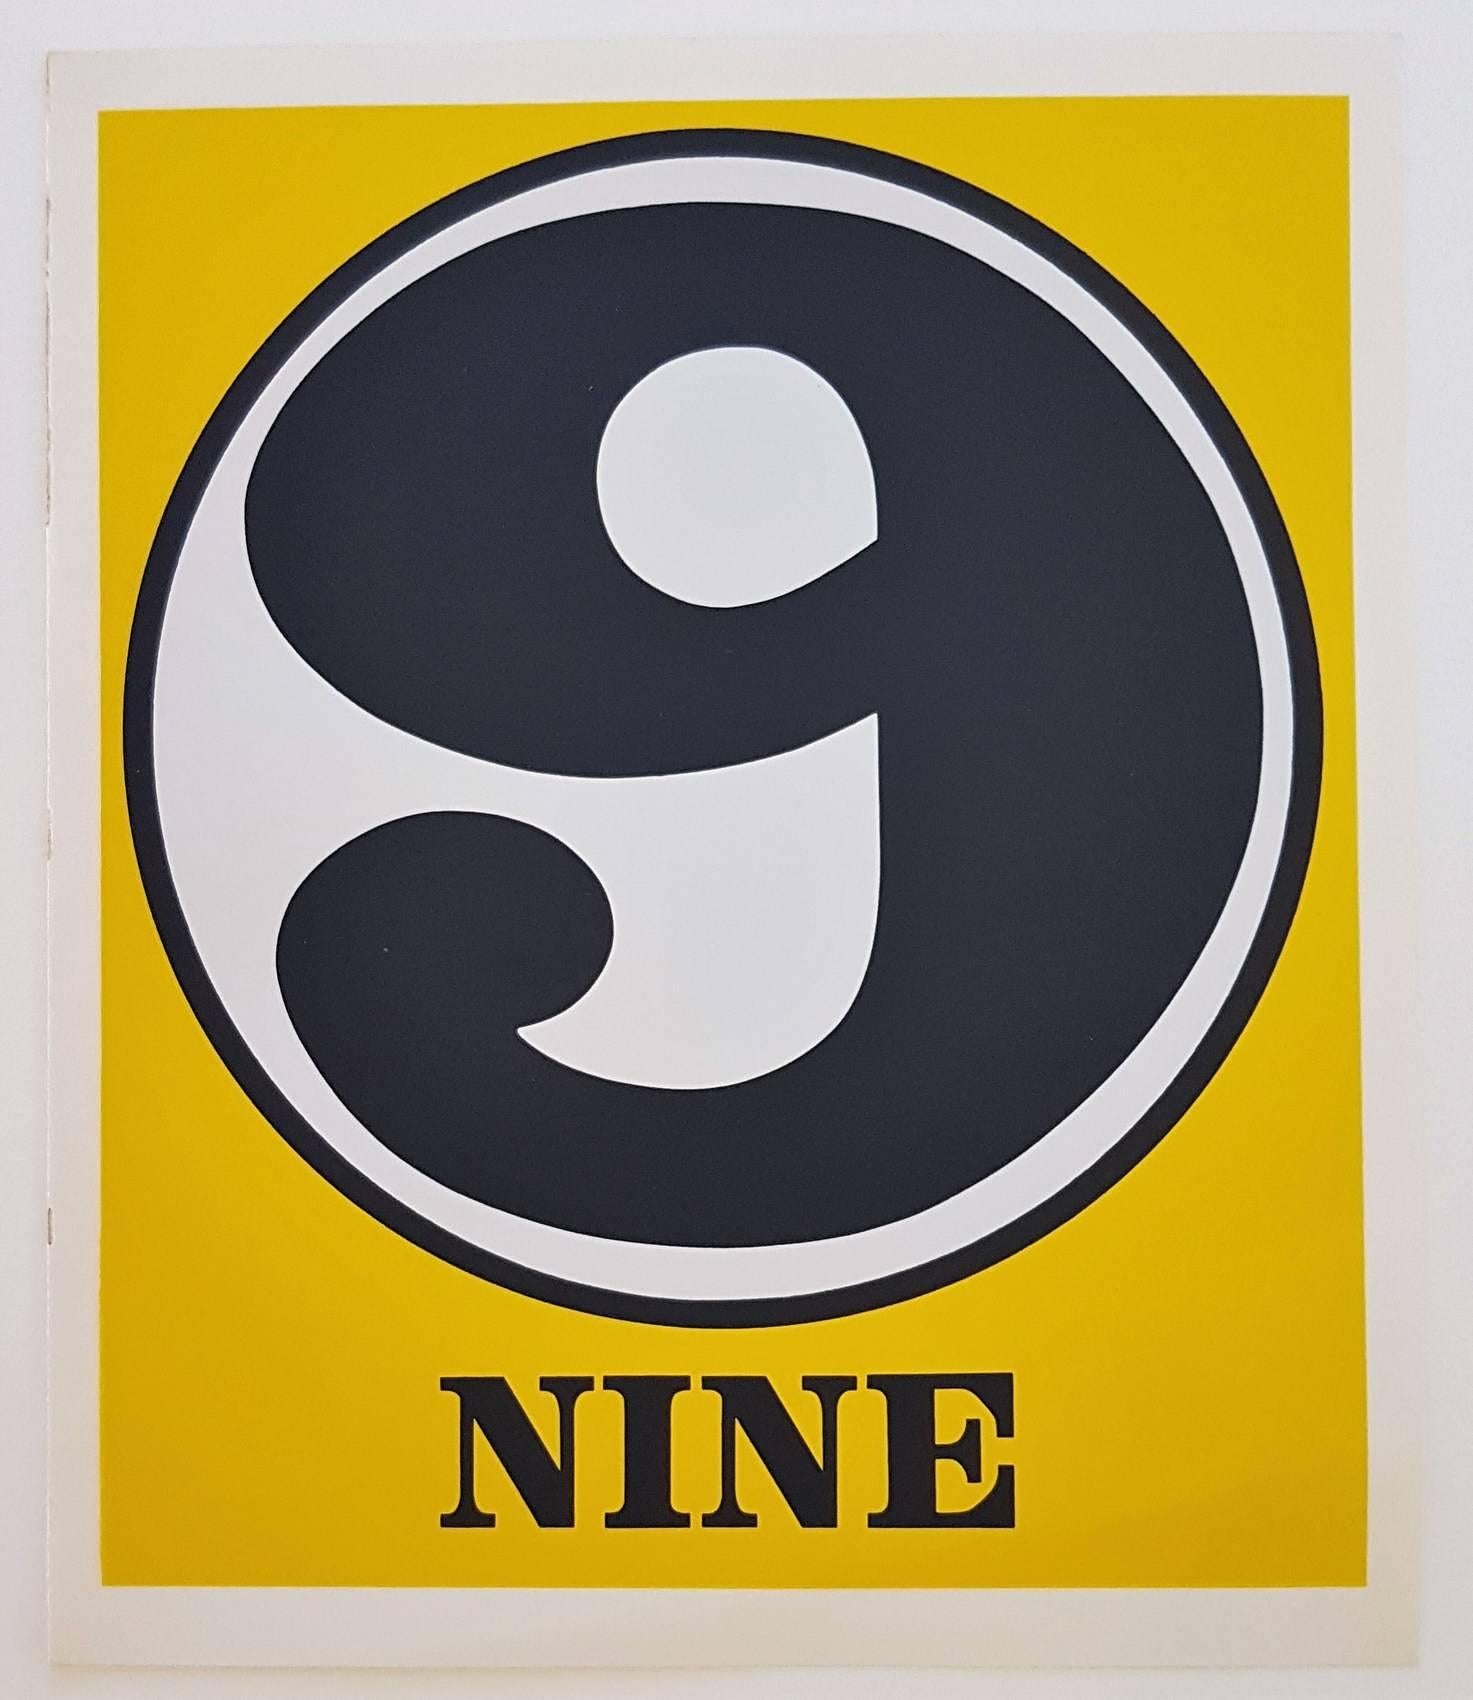 Number Suite - Nine - Print by Robert Indiana